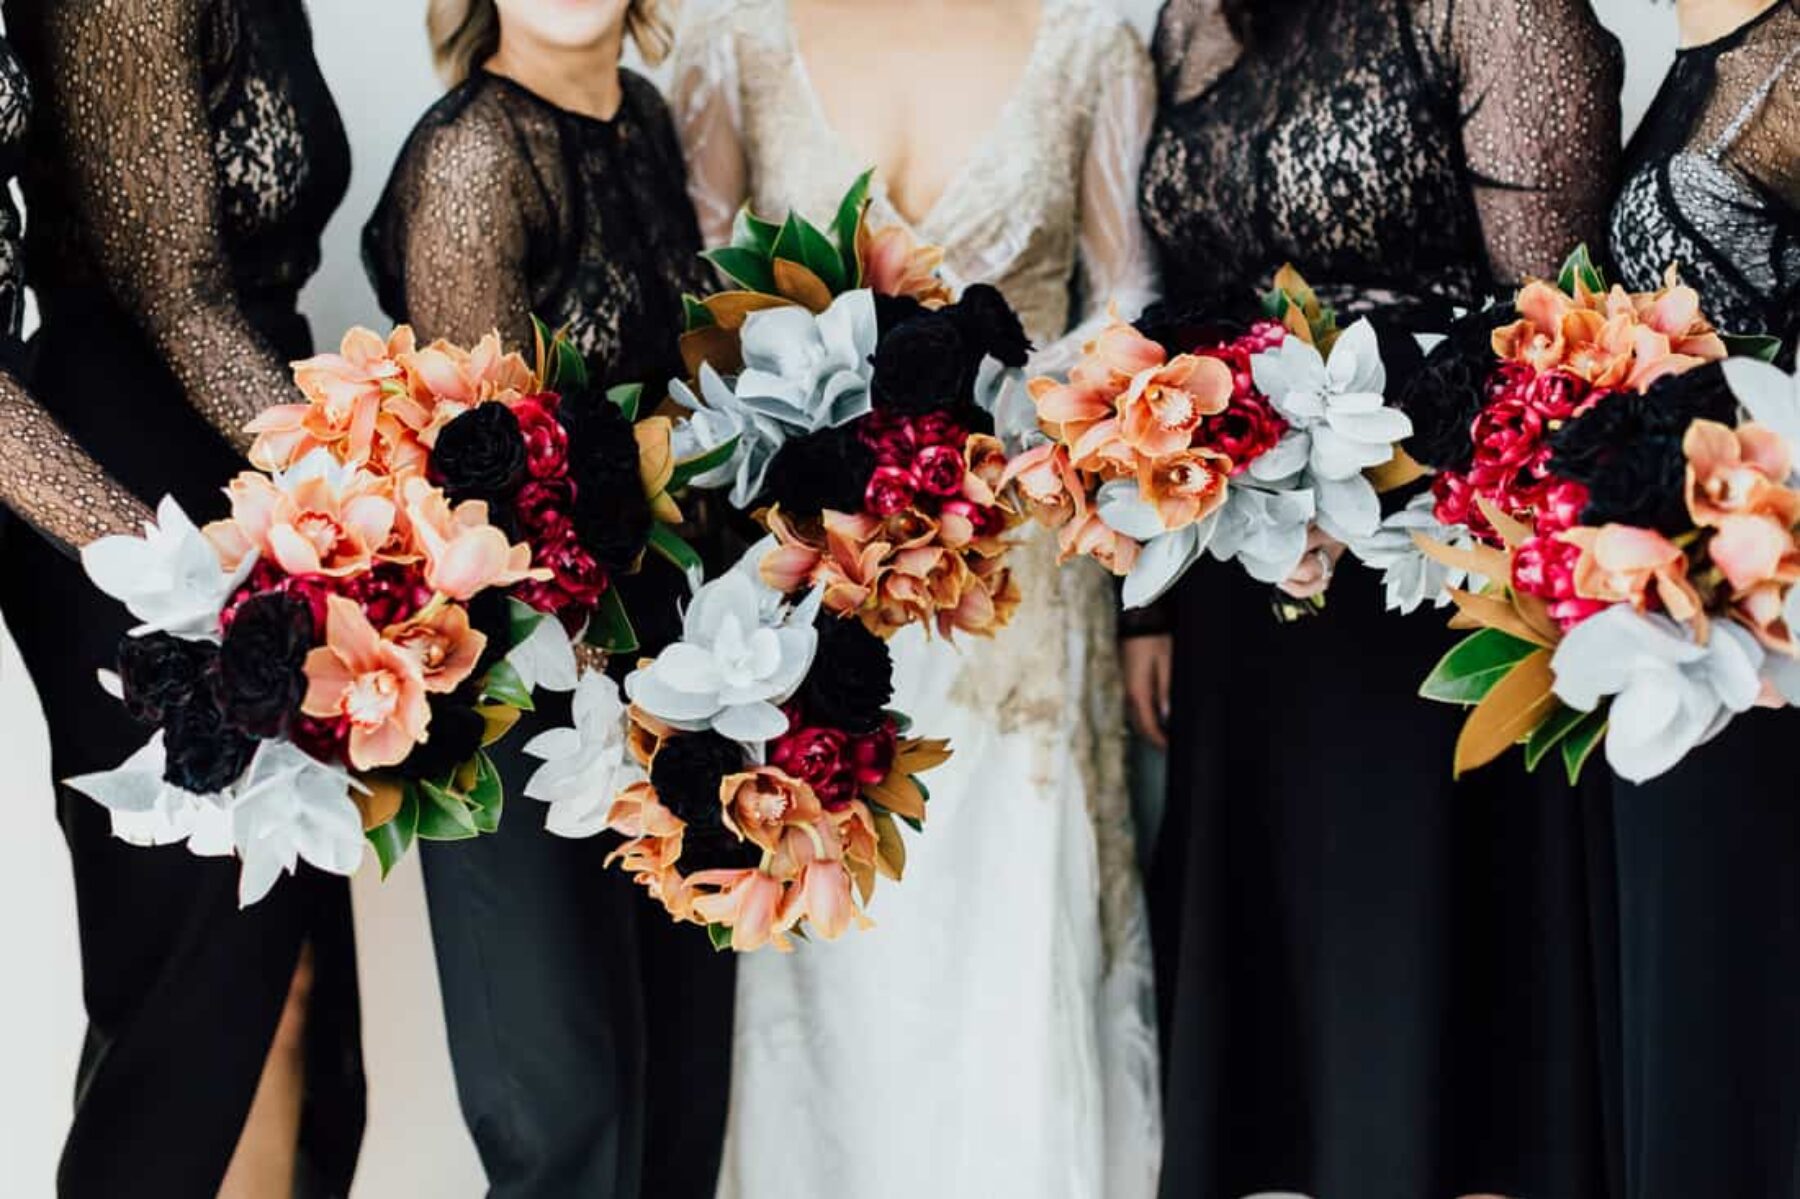 black lace bridesmaid dresses and copper-toned bouquet